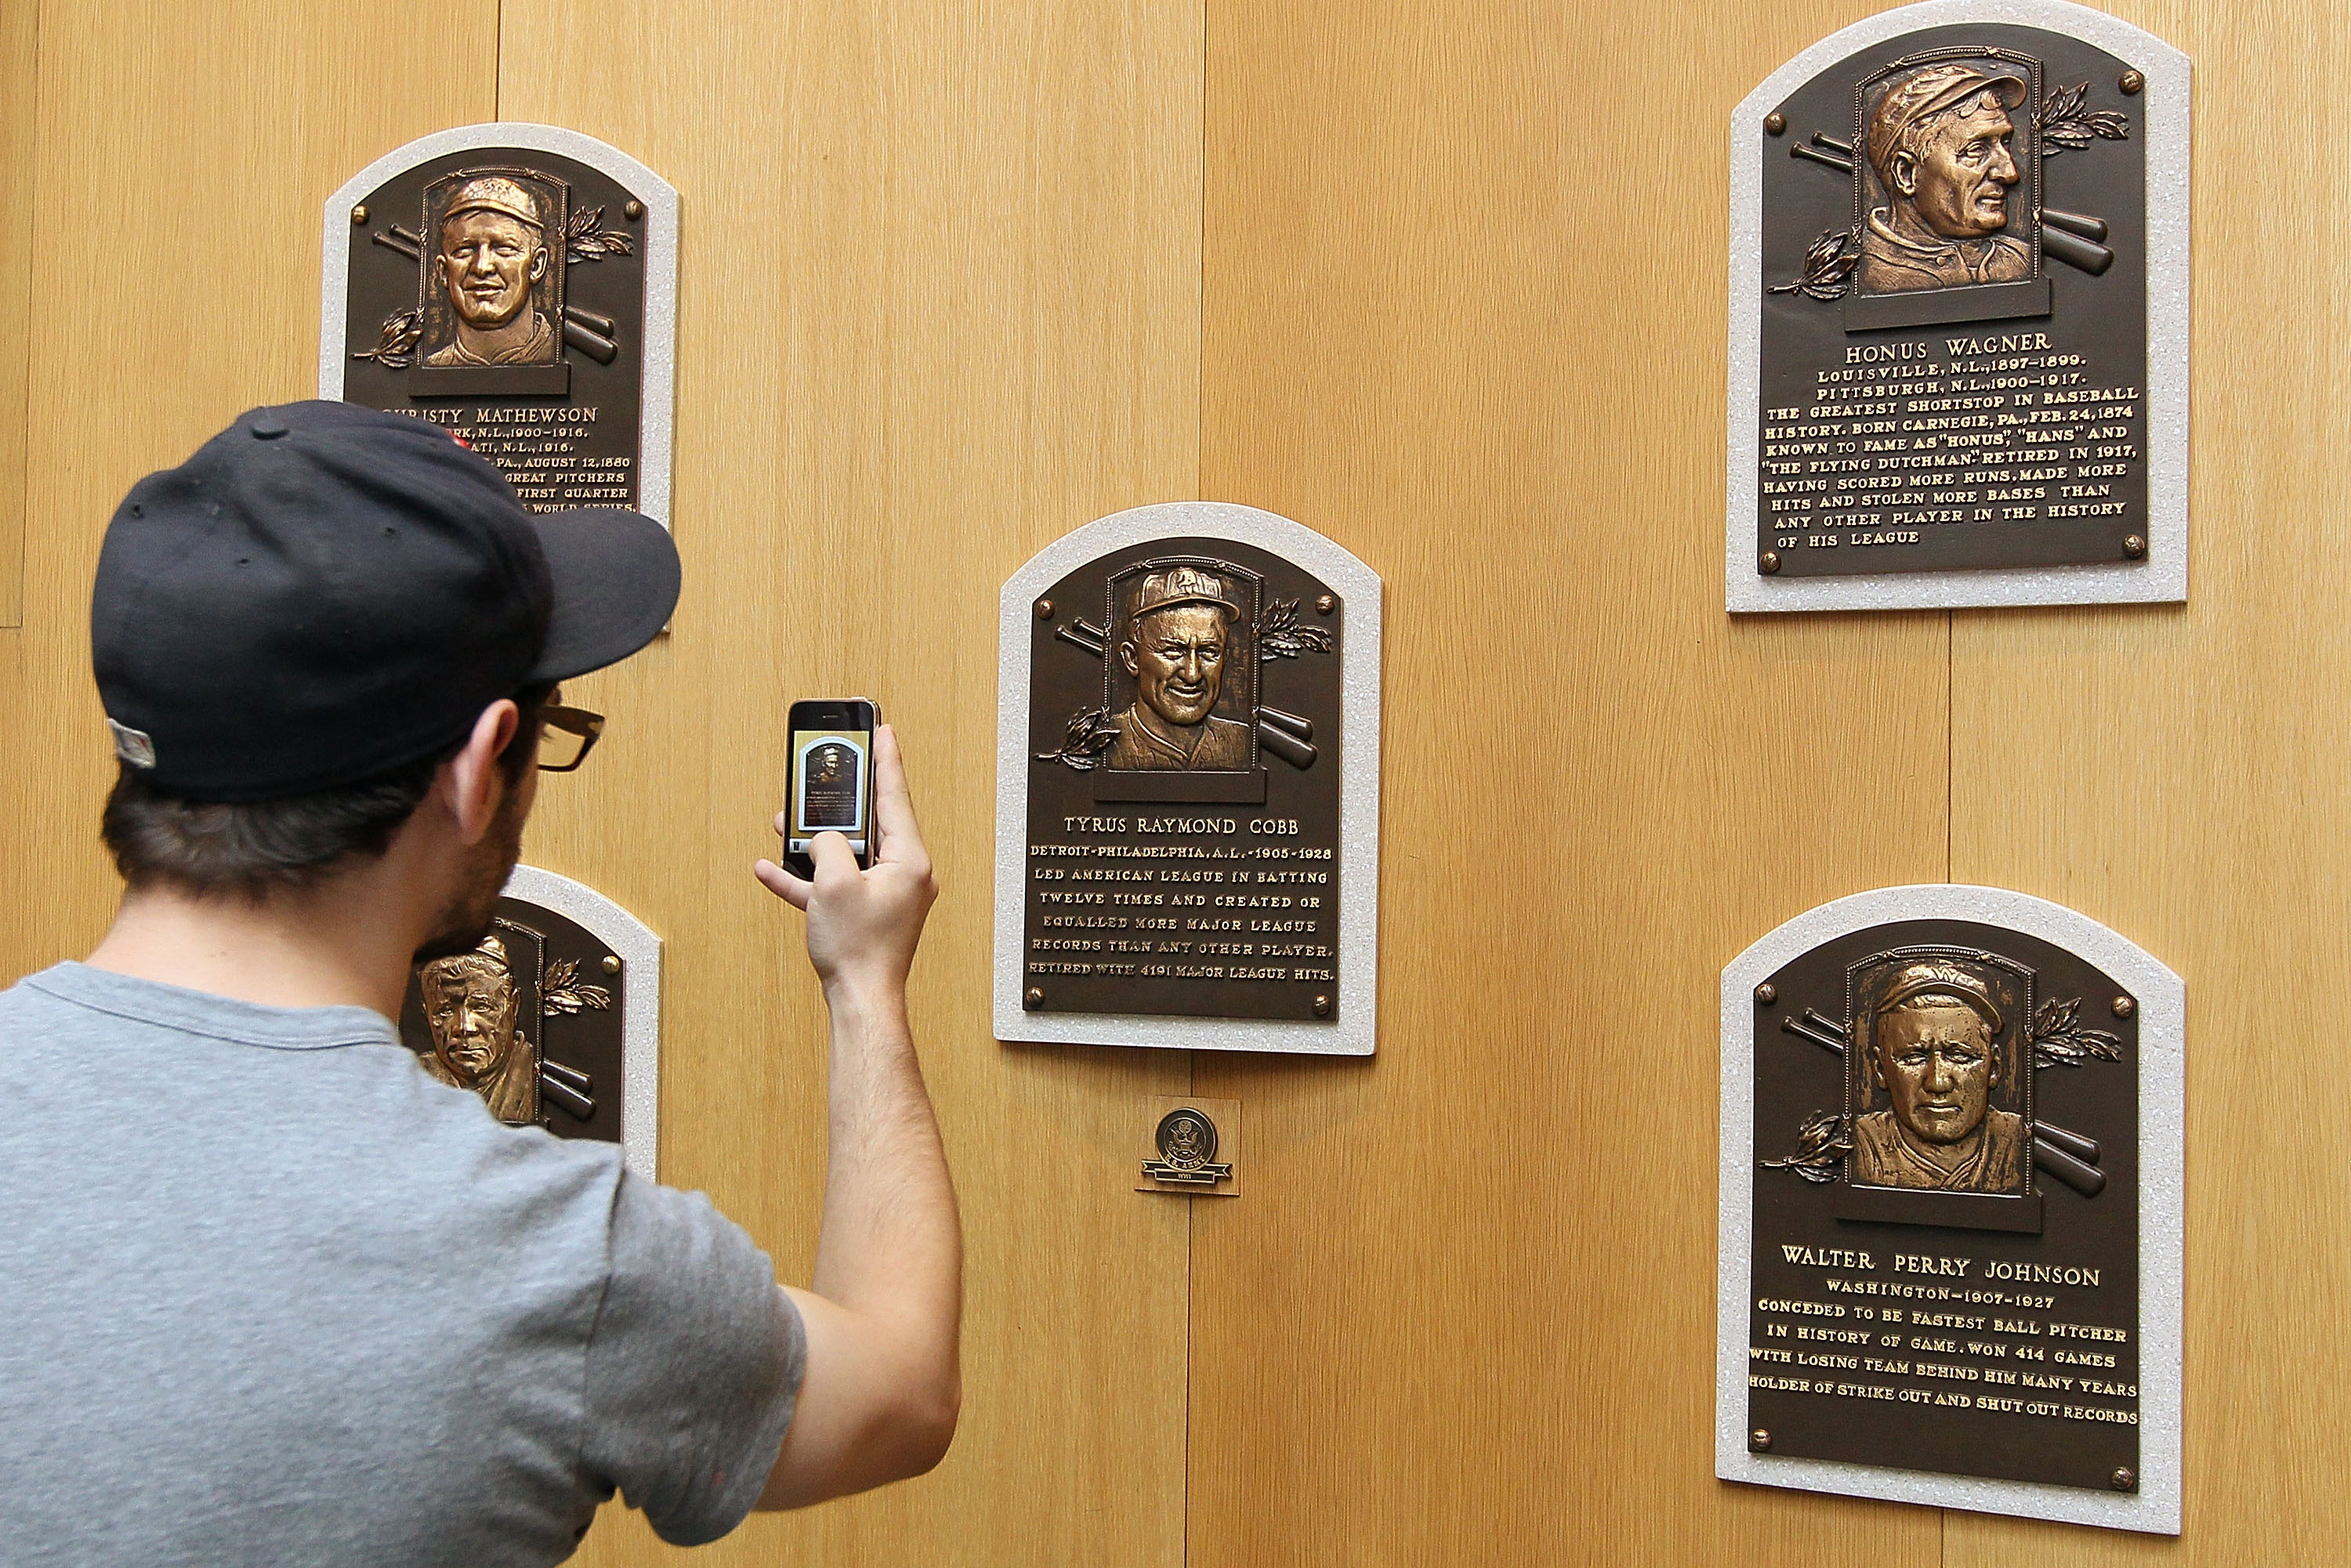 Maddux won't have Braves logo on Hall of Fame plaque